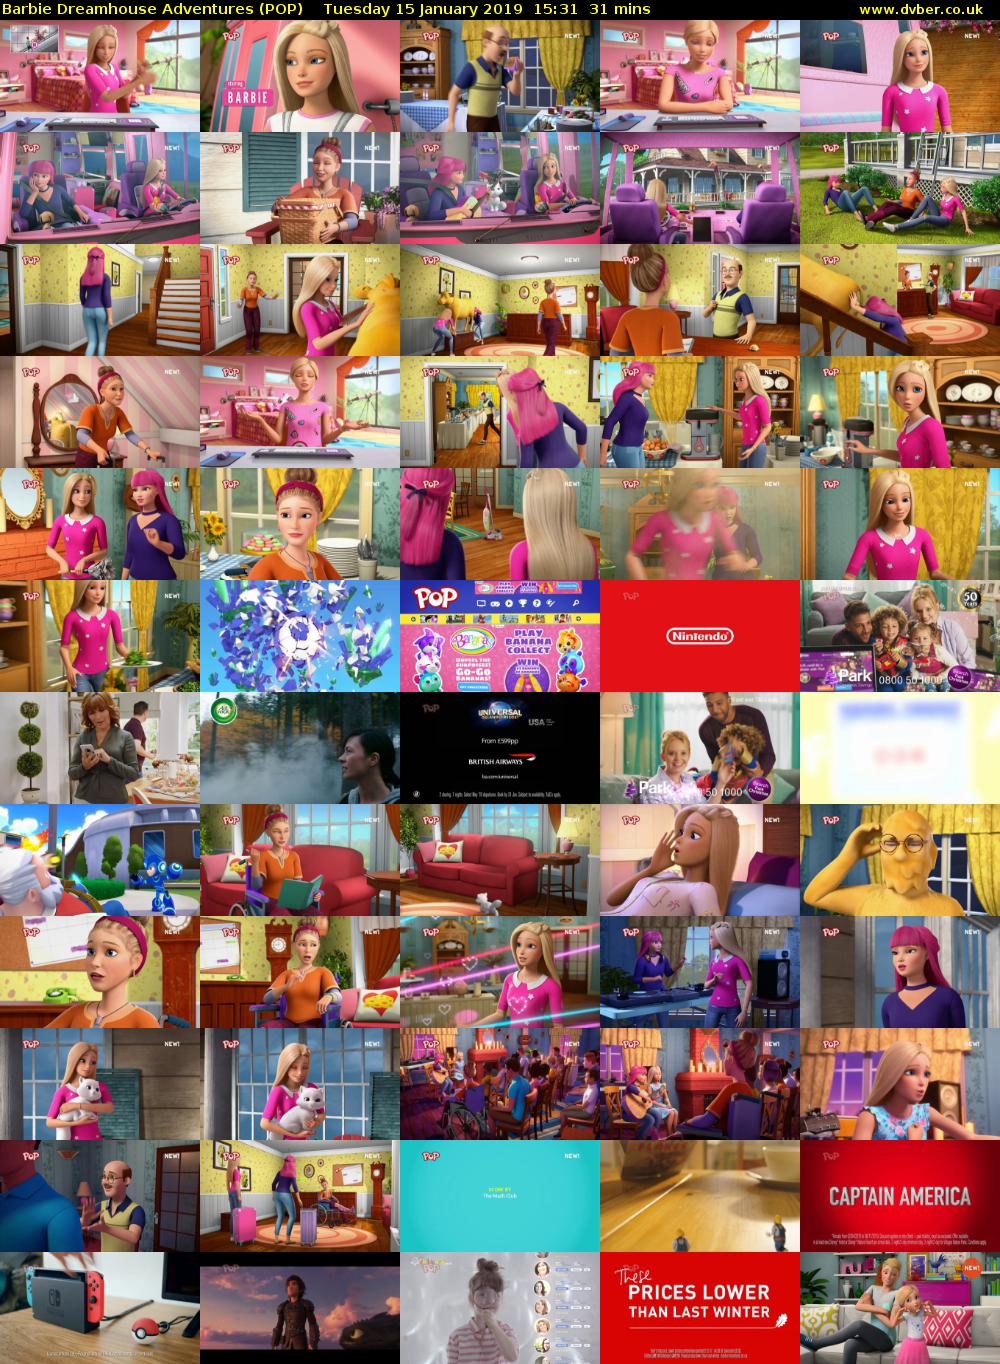 Barbie Dreamhouse Adventures (POP) Tuesday 15 January 2019 15:31 - 16:02